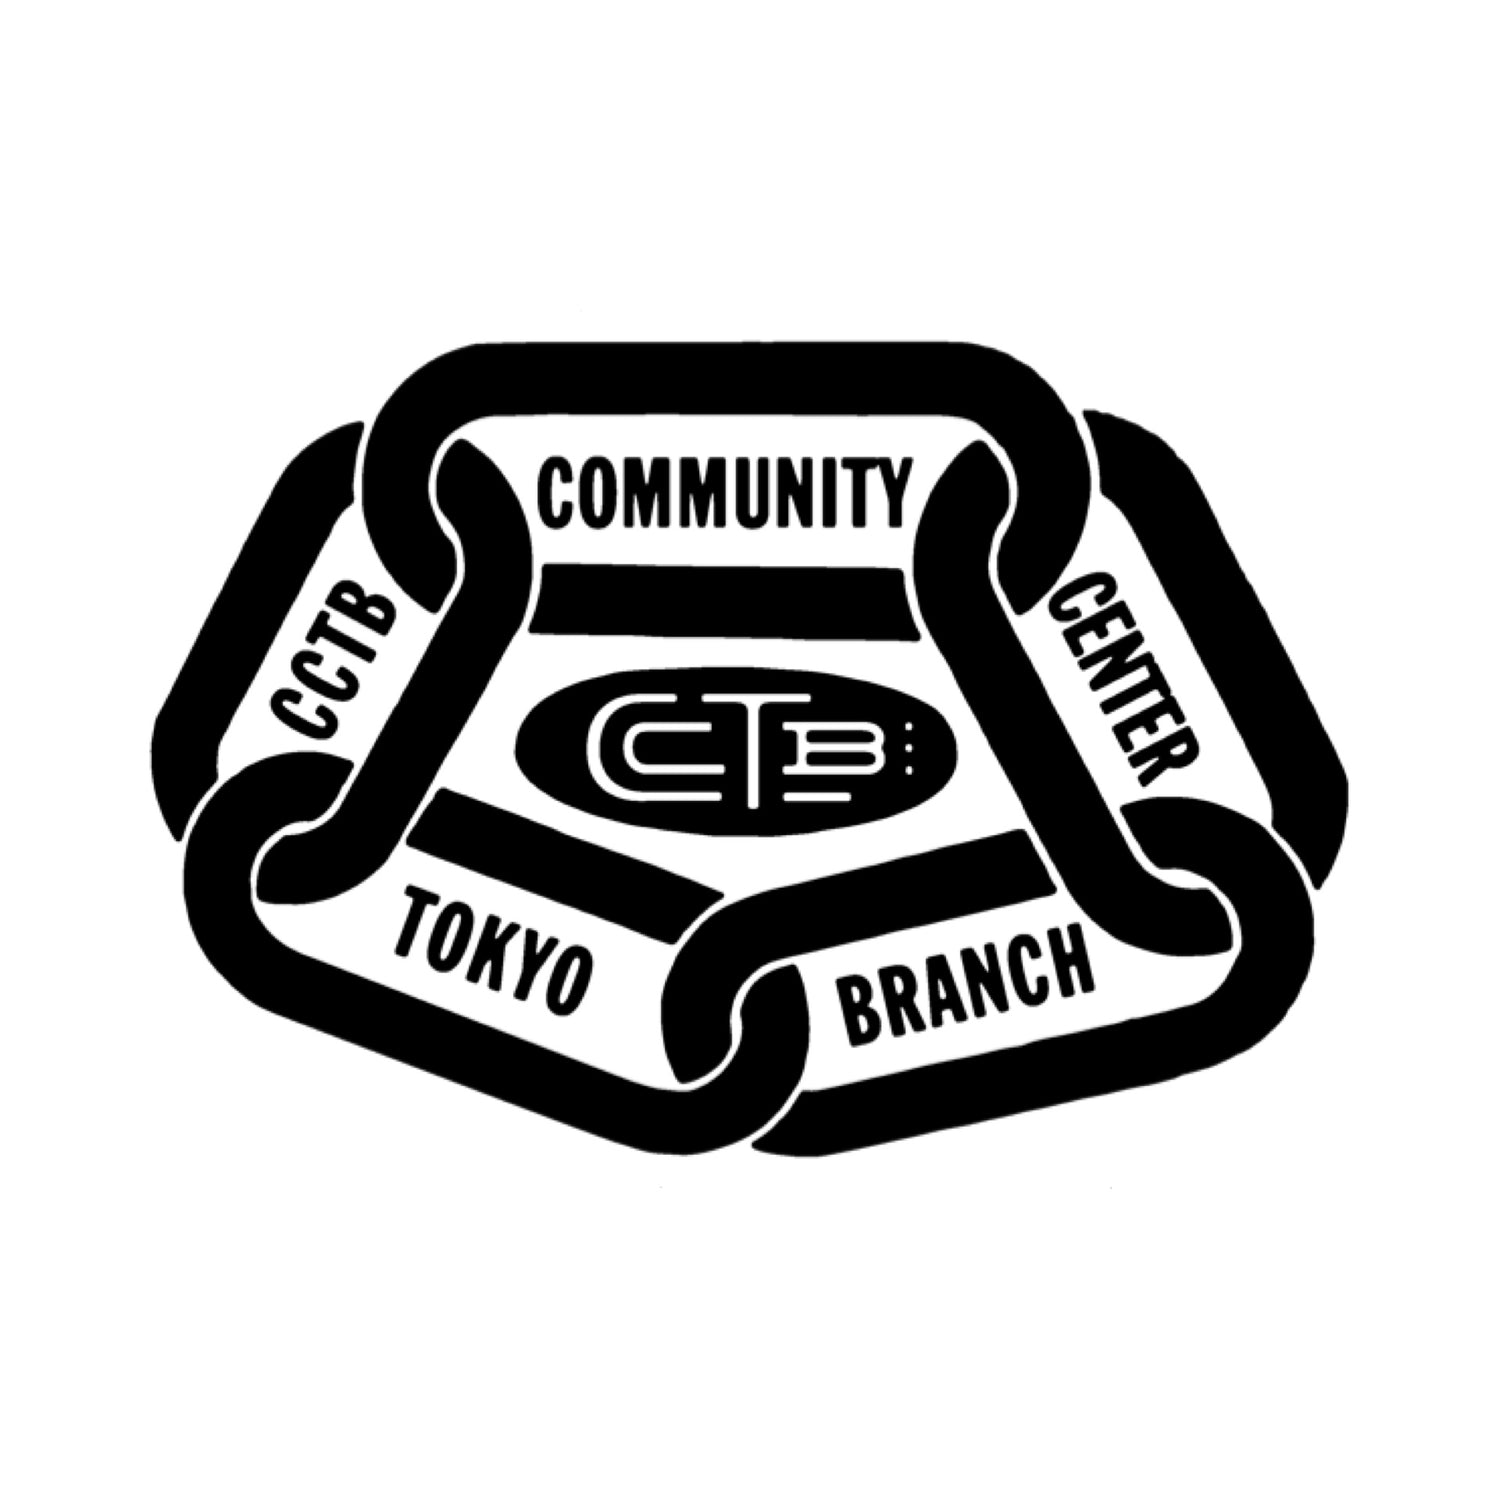 Community Center Tokyo Branch Online Shopリニューアル